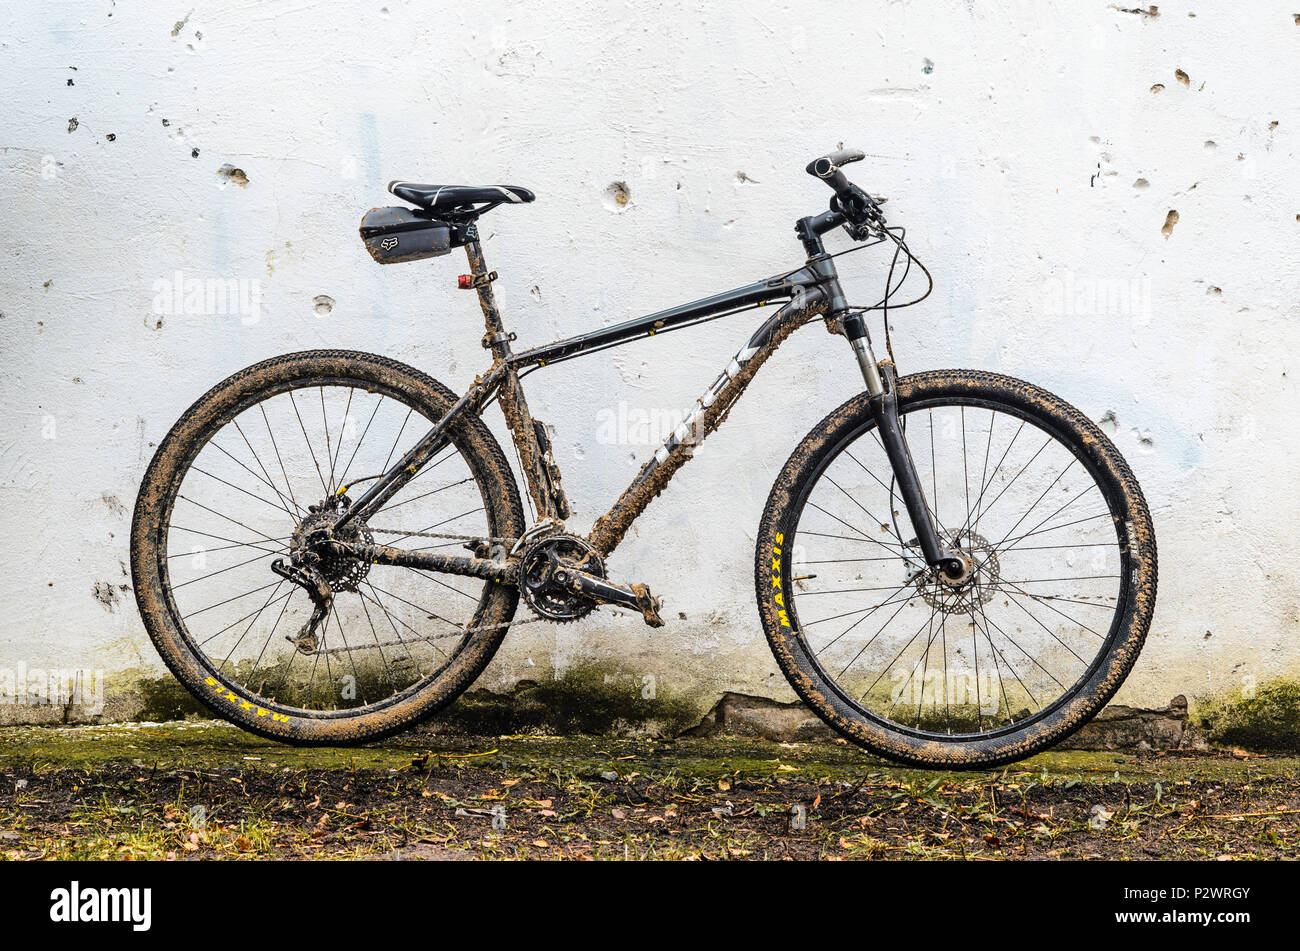 buitenspiegel spiraal gaan beslissen Belarus, Minsk - November, 2017: Gray Color Mountain Bike - Trek X-caliber 6  2014 Model Year. Dirty Mountain Bike Covered with Mud After Riding in Bad  Stock Photo - Alamy